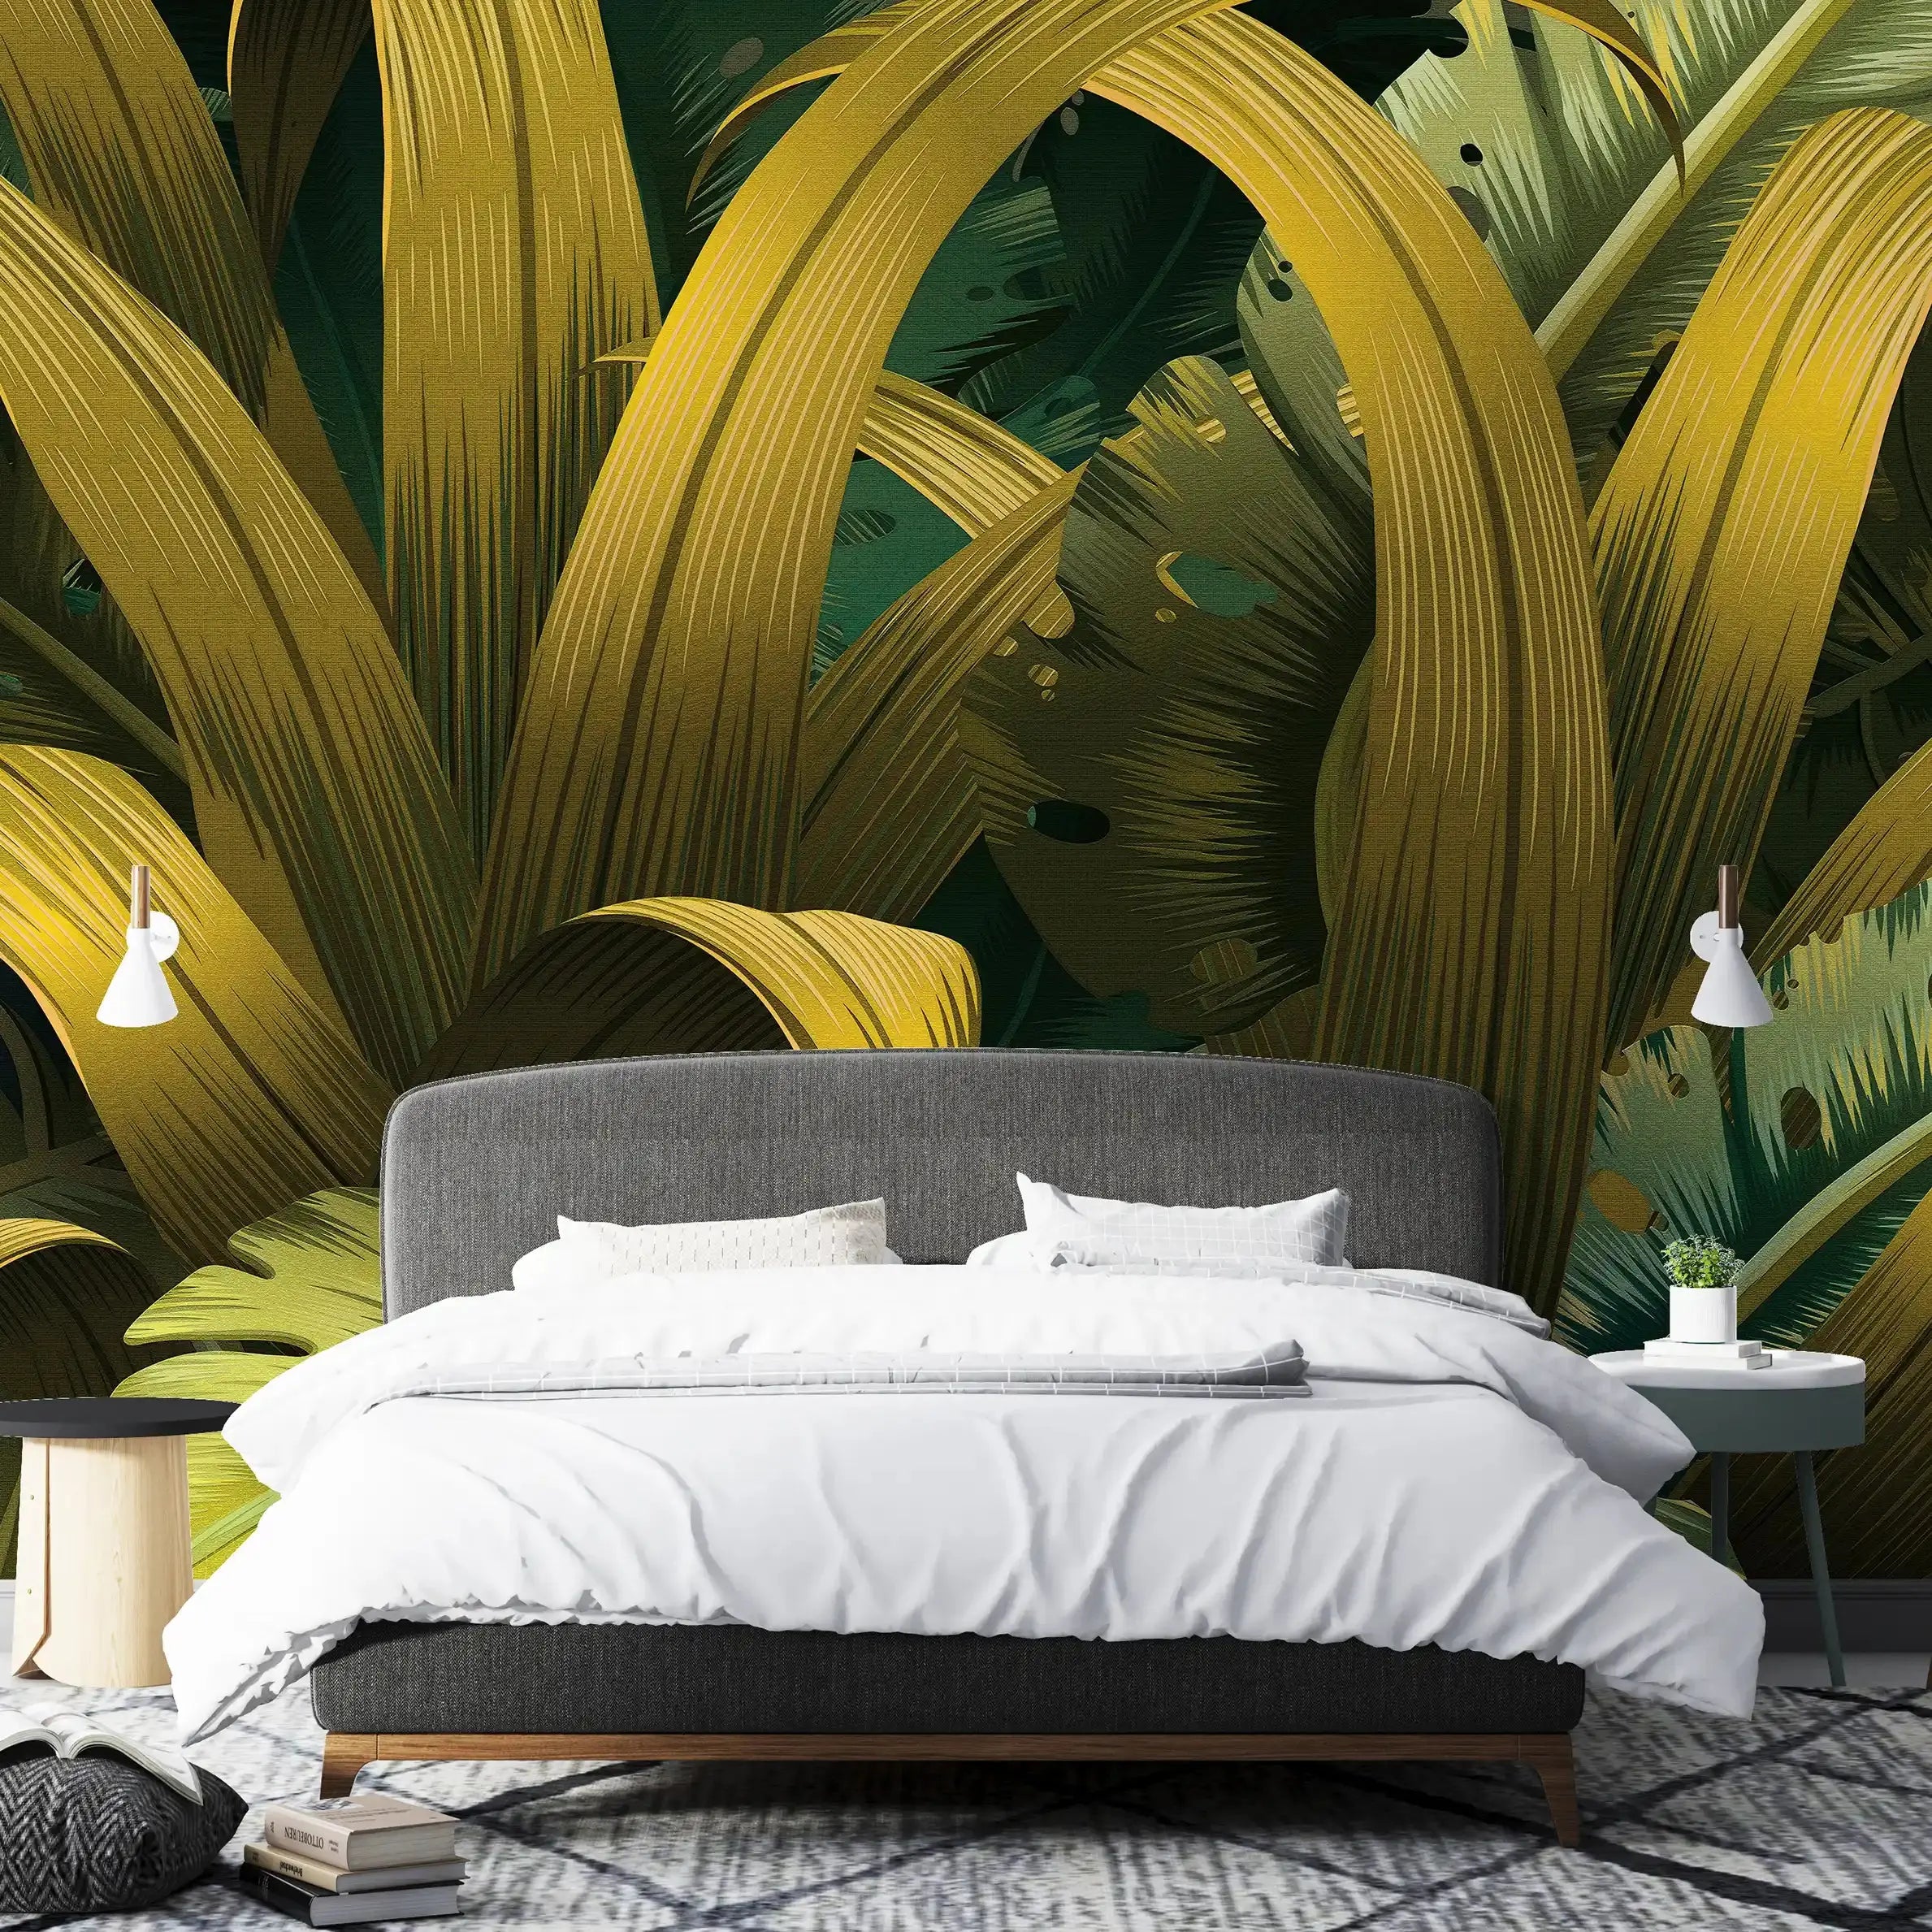 3049-B / Yellow Jungle Peel and Stick Mural - Temporary Wallpaper, Tropical Rainforest, Easy Install Wallpaper for Wall Decor, DIY Decor, and Room Decor - Artevella